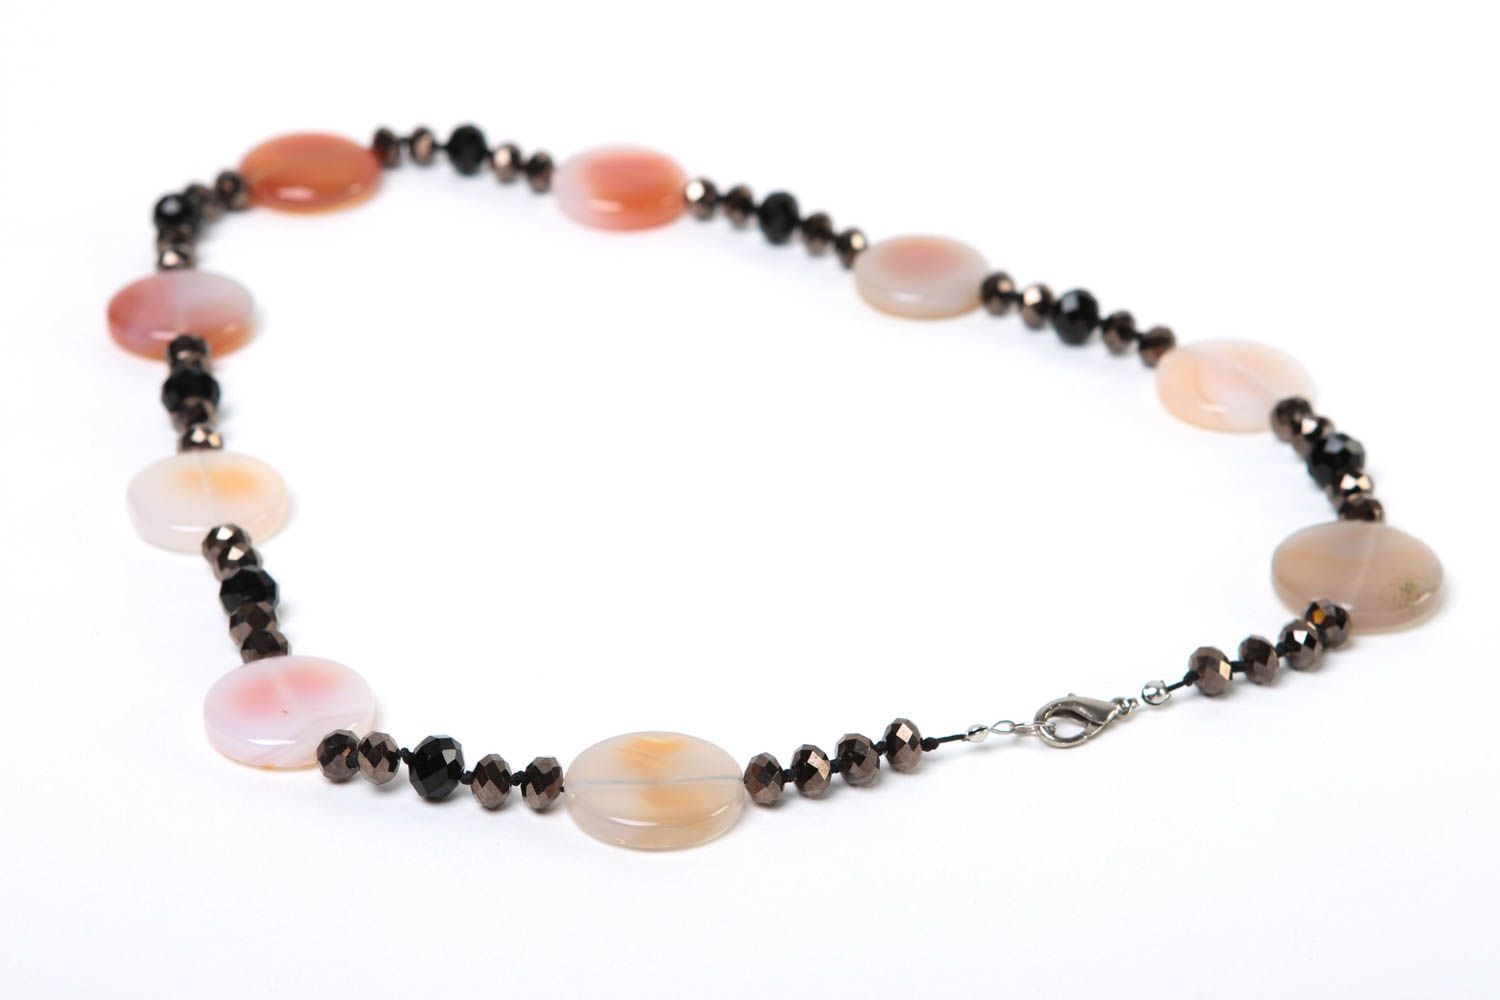 Handmade necklace bead necklace gemstone jewelry designer accessories gift ideas photo 4